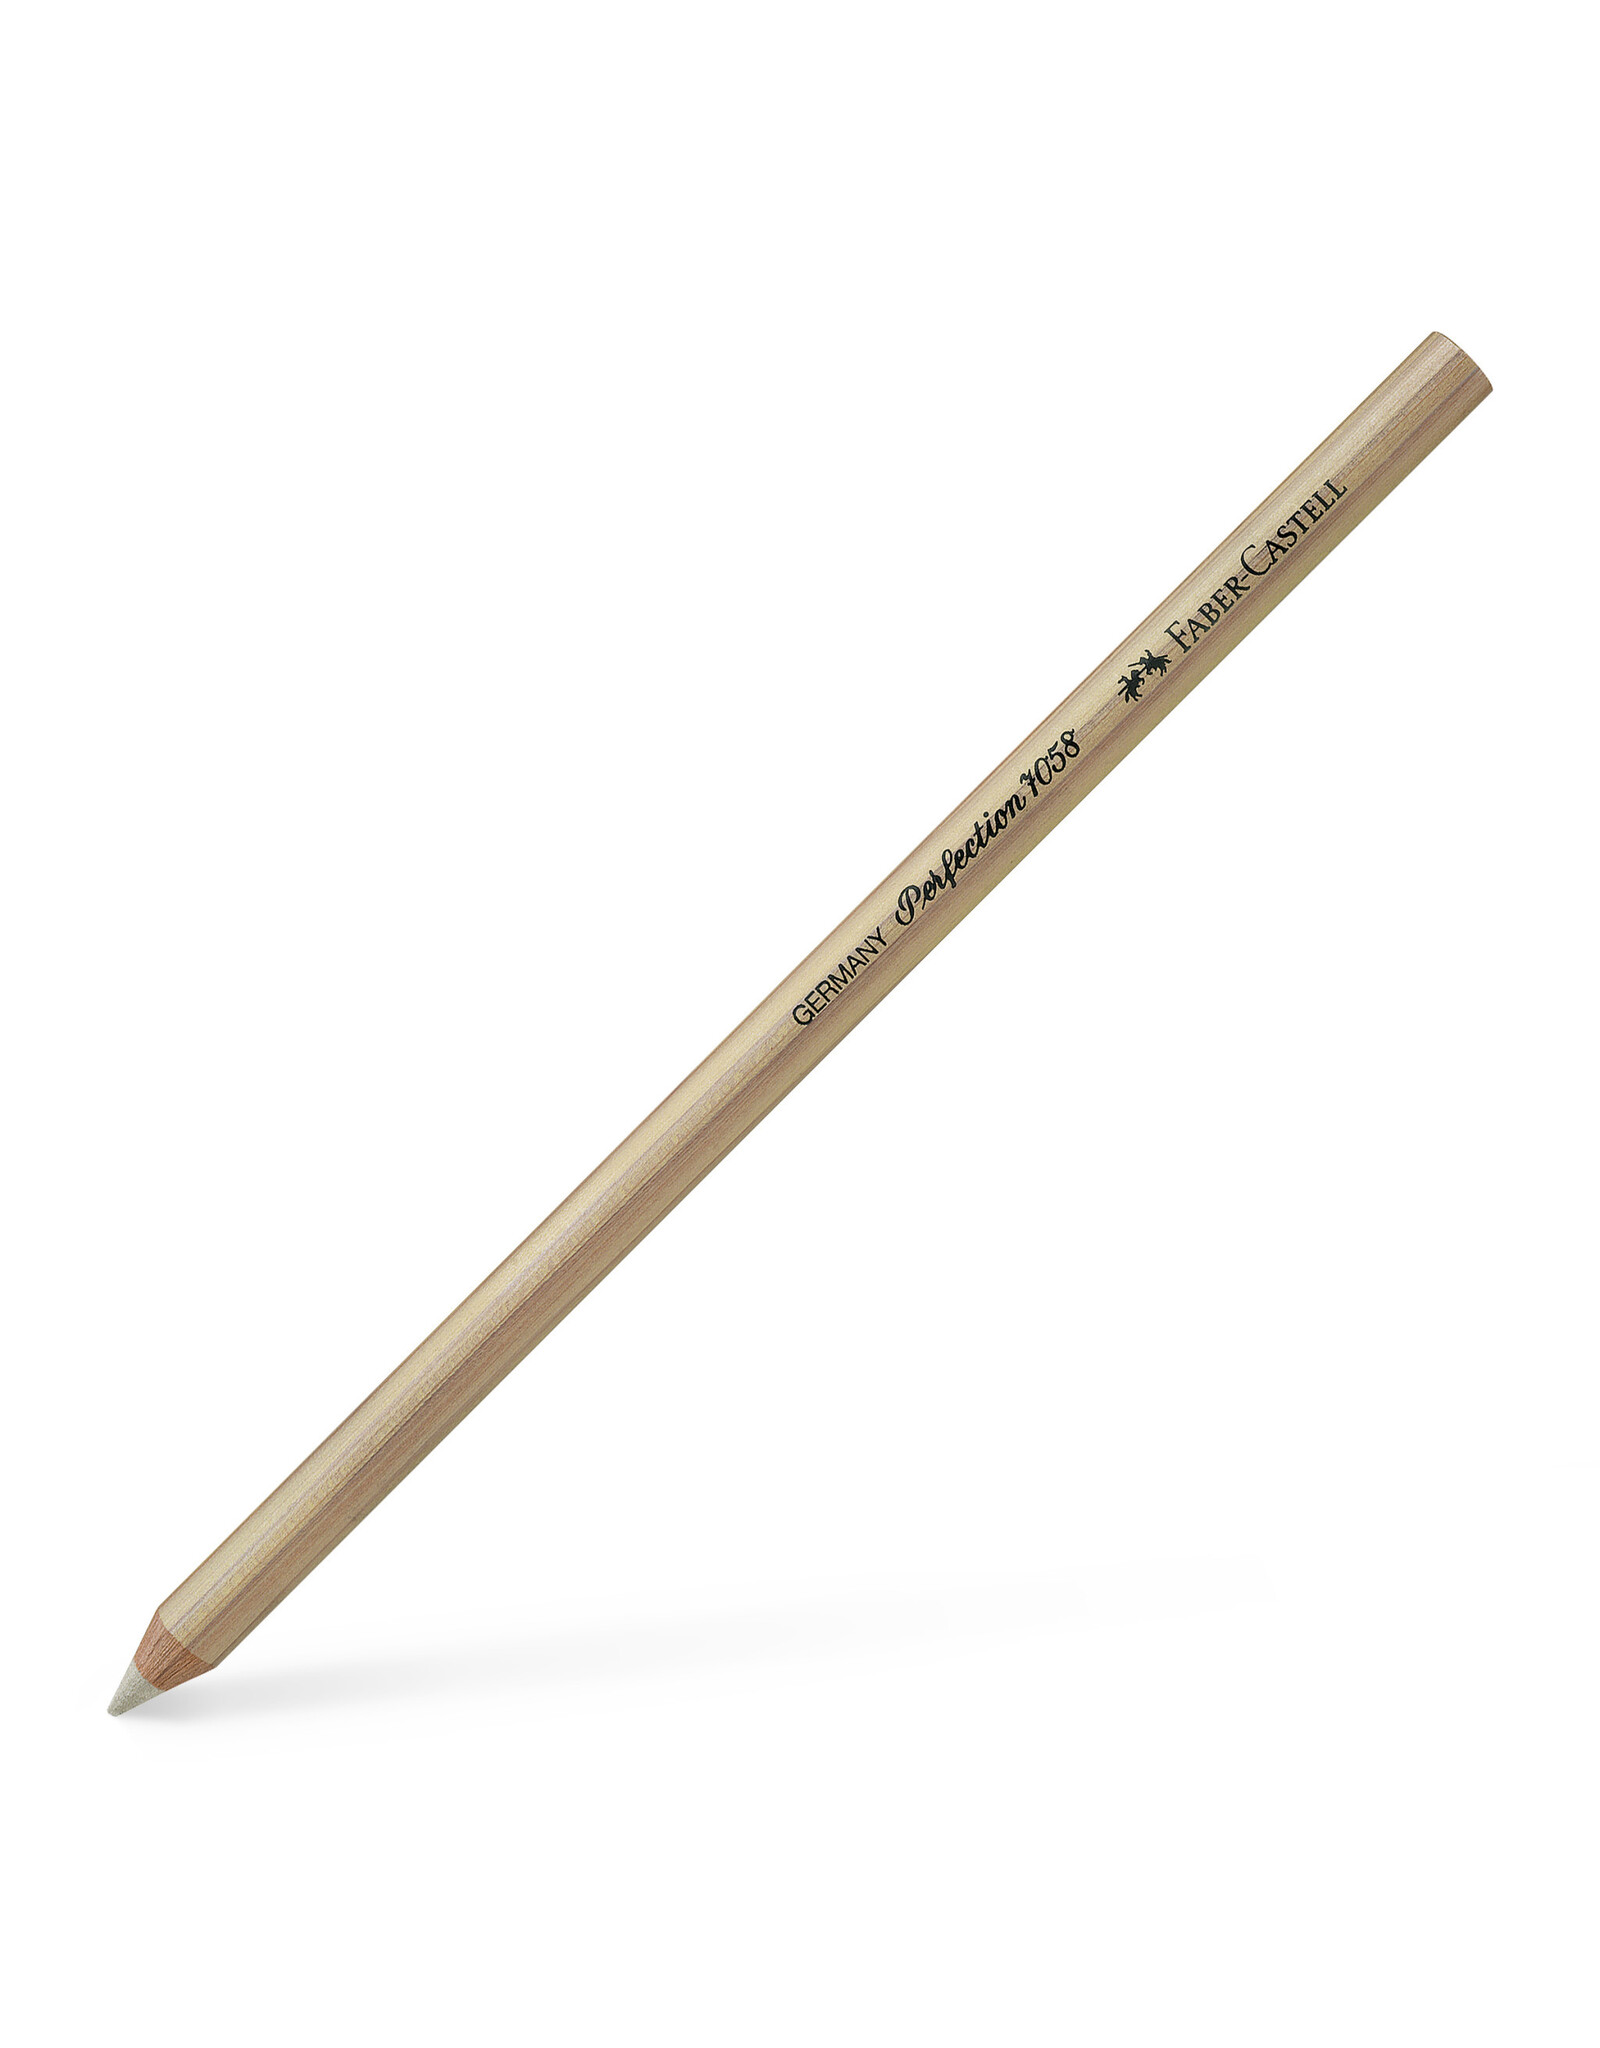 Faber-Castell Eraser Pencil